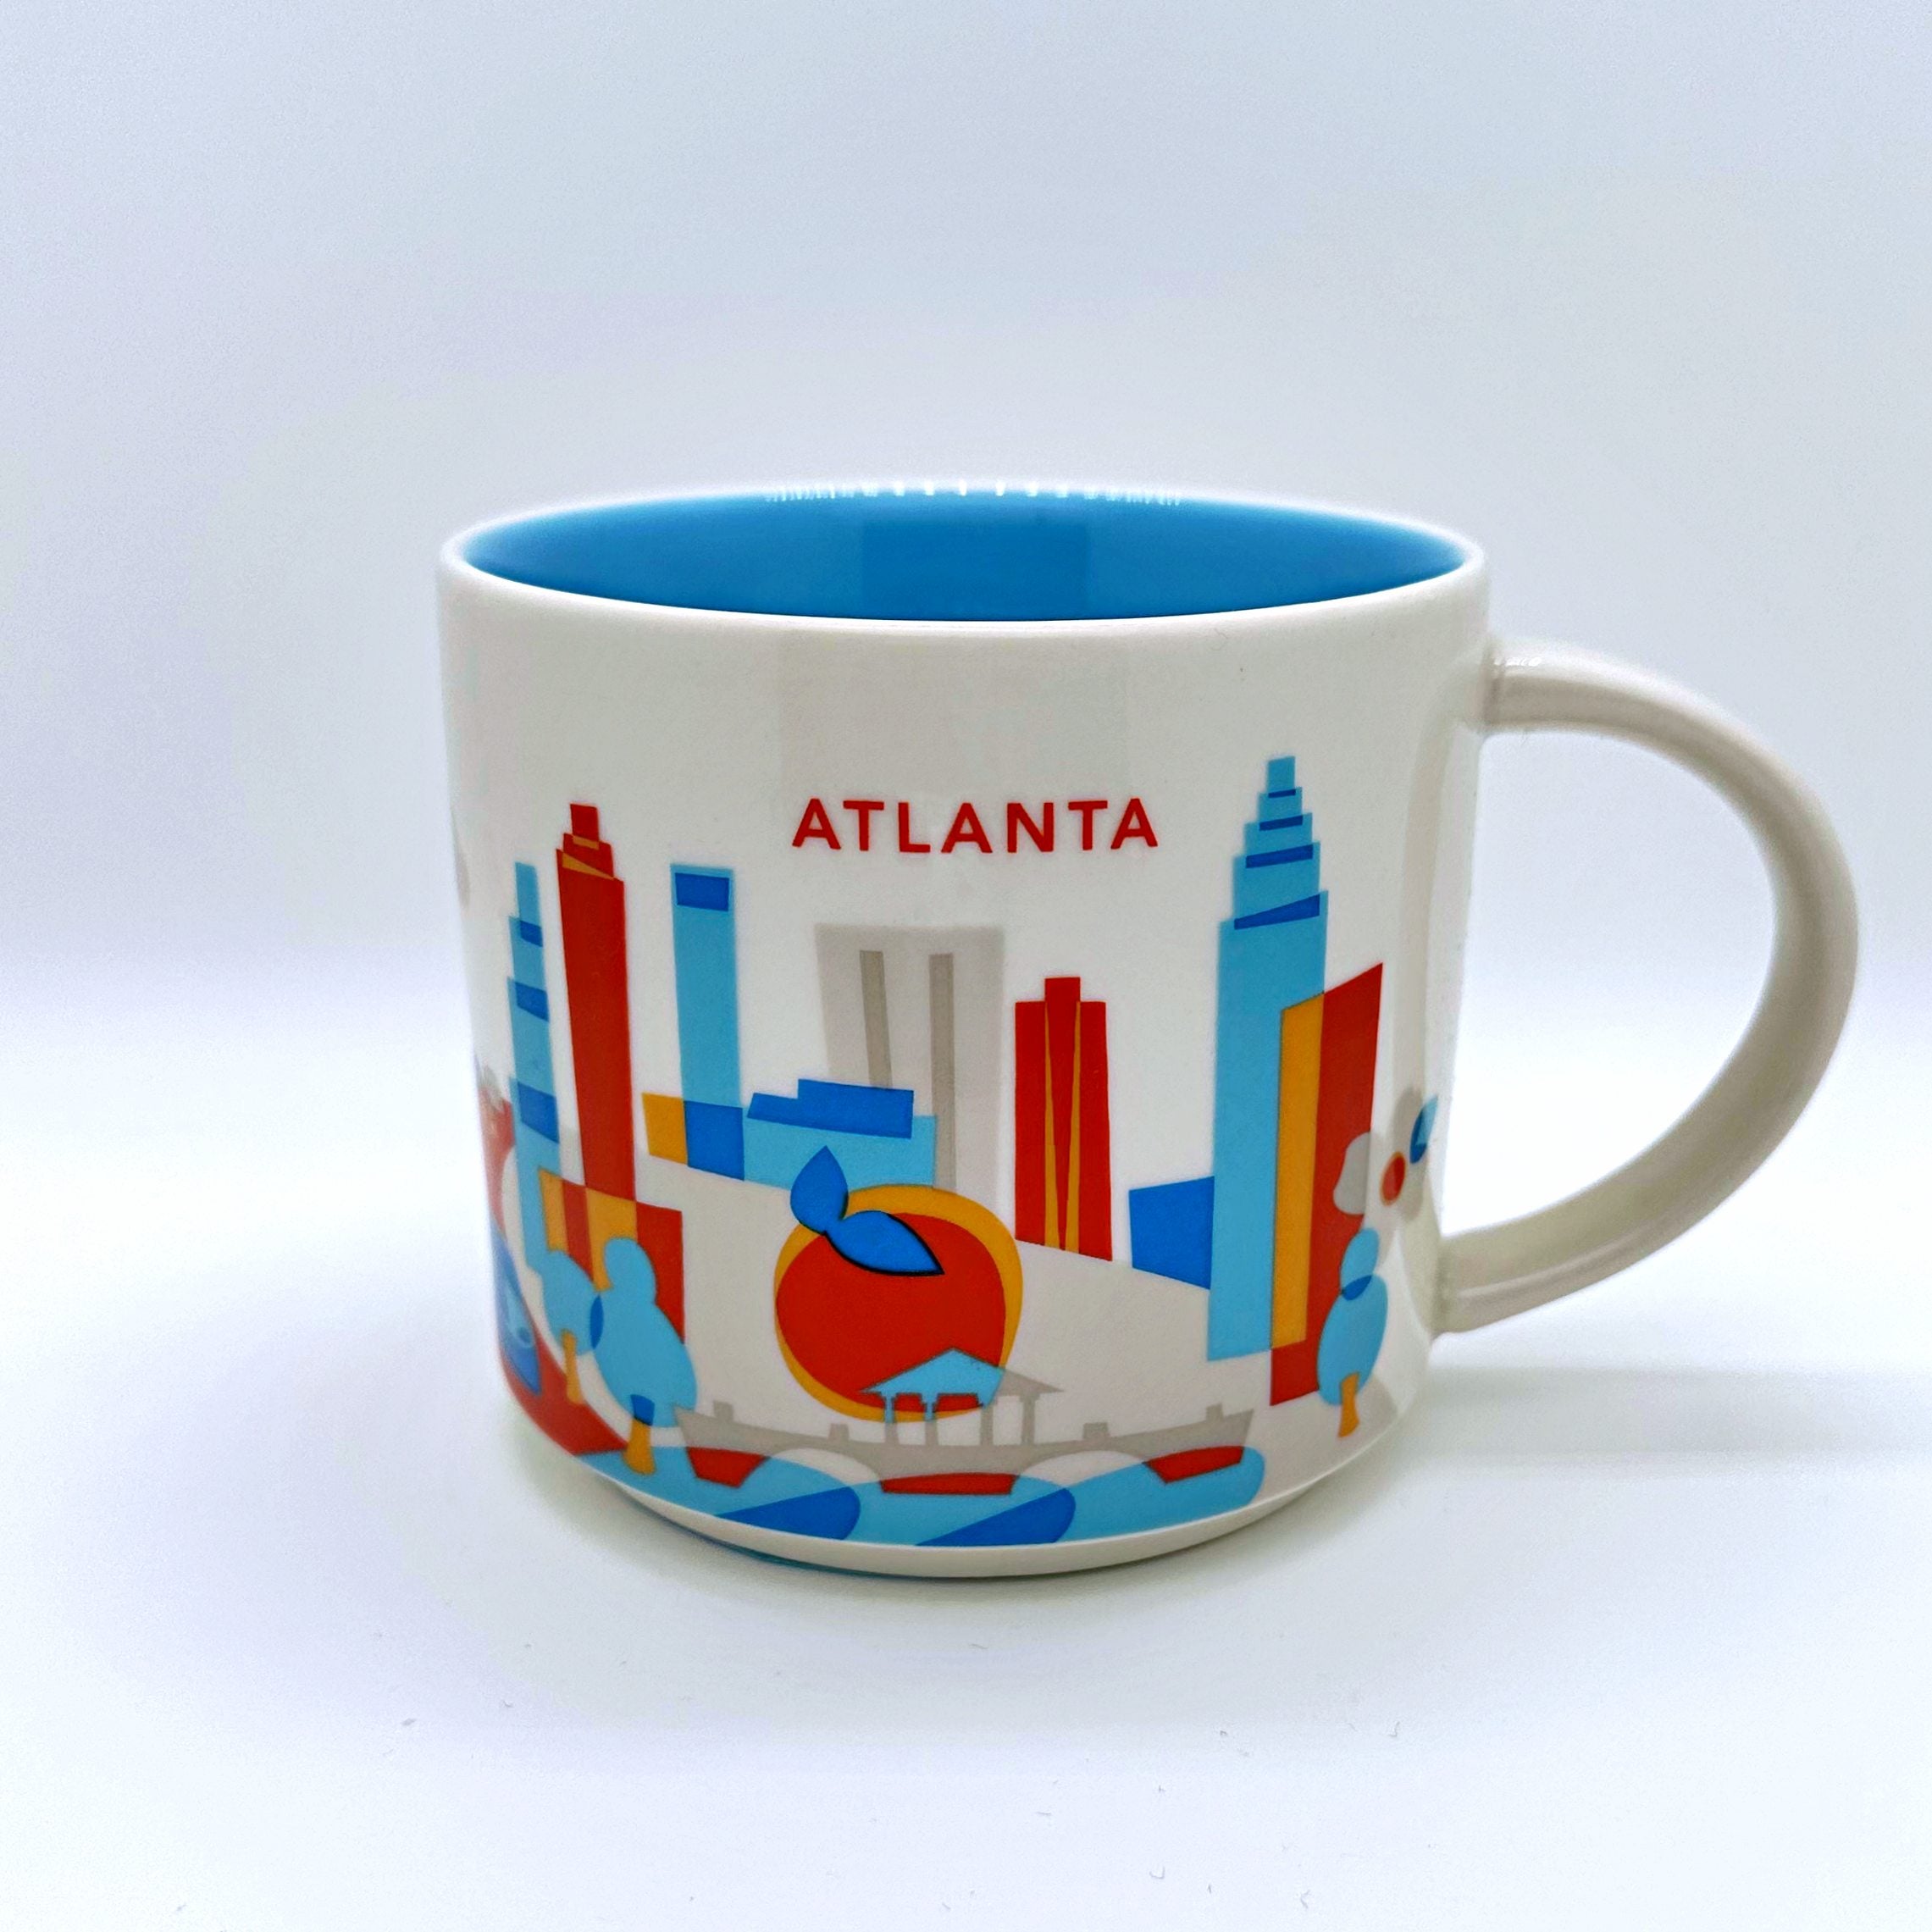 Atlanta City Kaffee Tasse